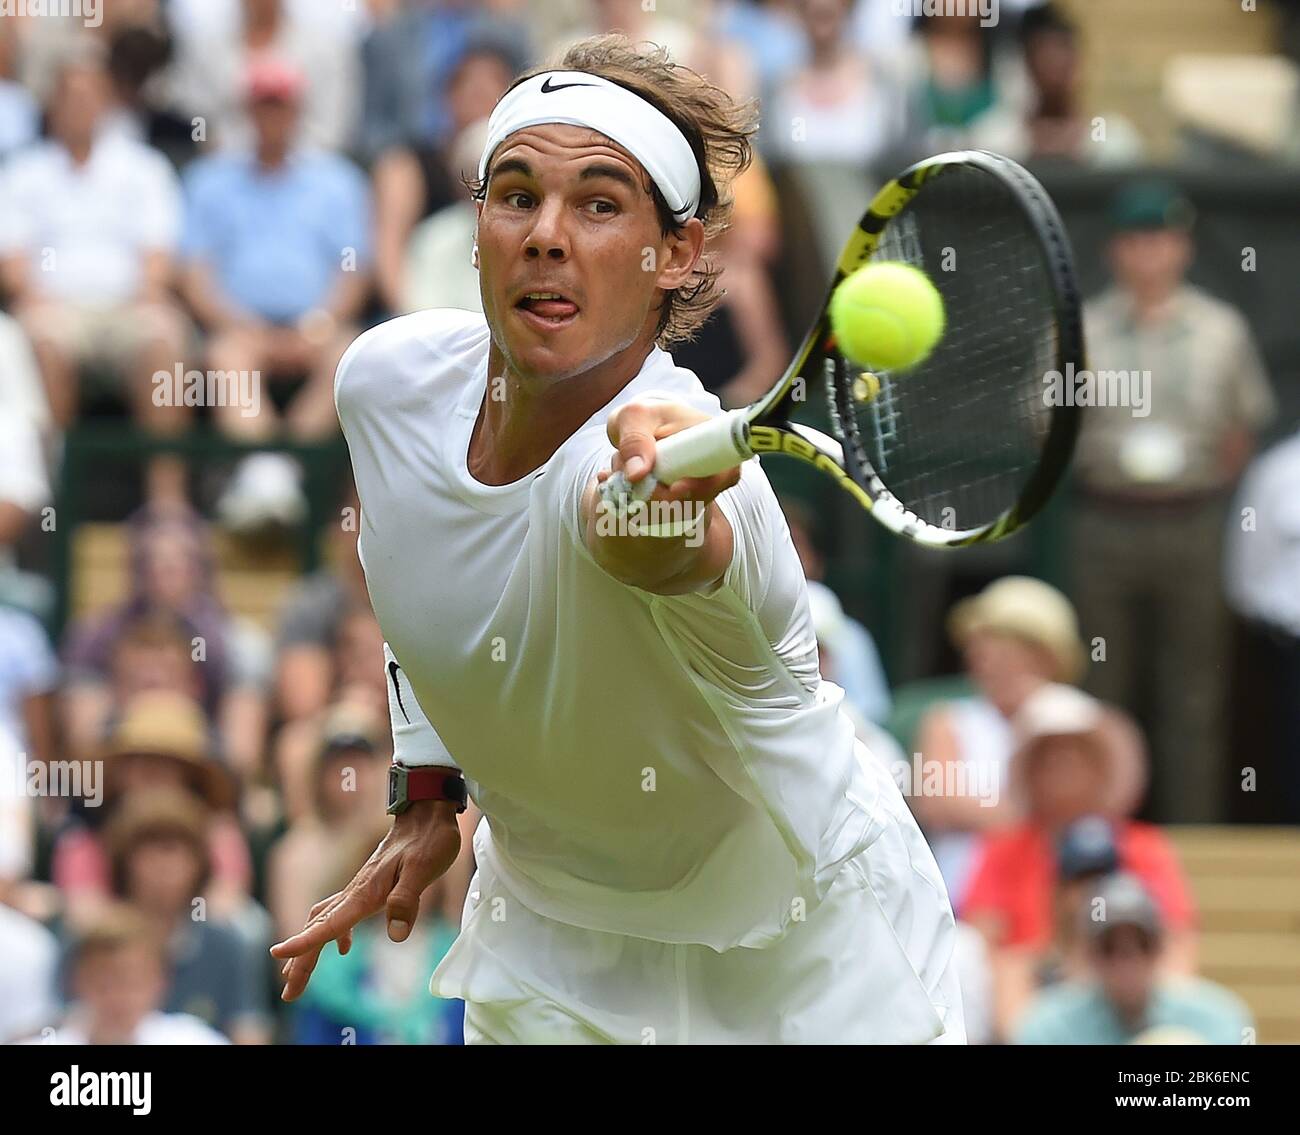 IR20140624. 14/06/24. Wimbledon Tennis Championships 2014, Wimbledon, Londra. Mens Singles, Martin Klizan, (SVK) contro Rafael Nadal, (ESP) (2) sul Centro Foto Stock